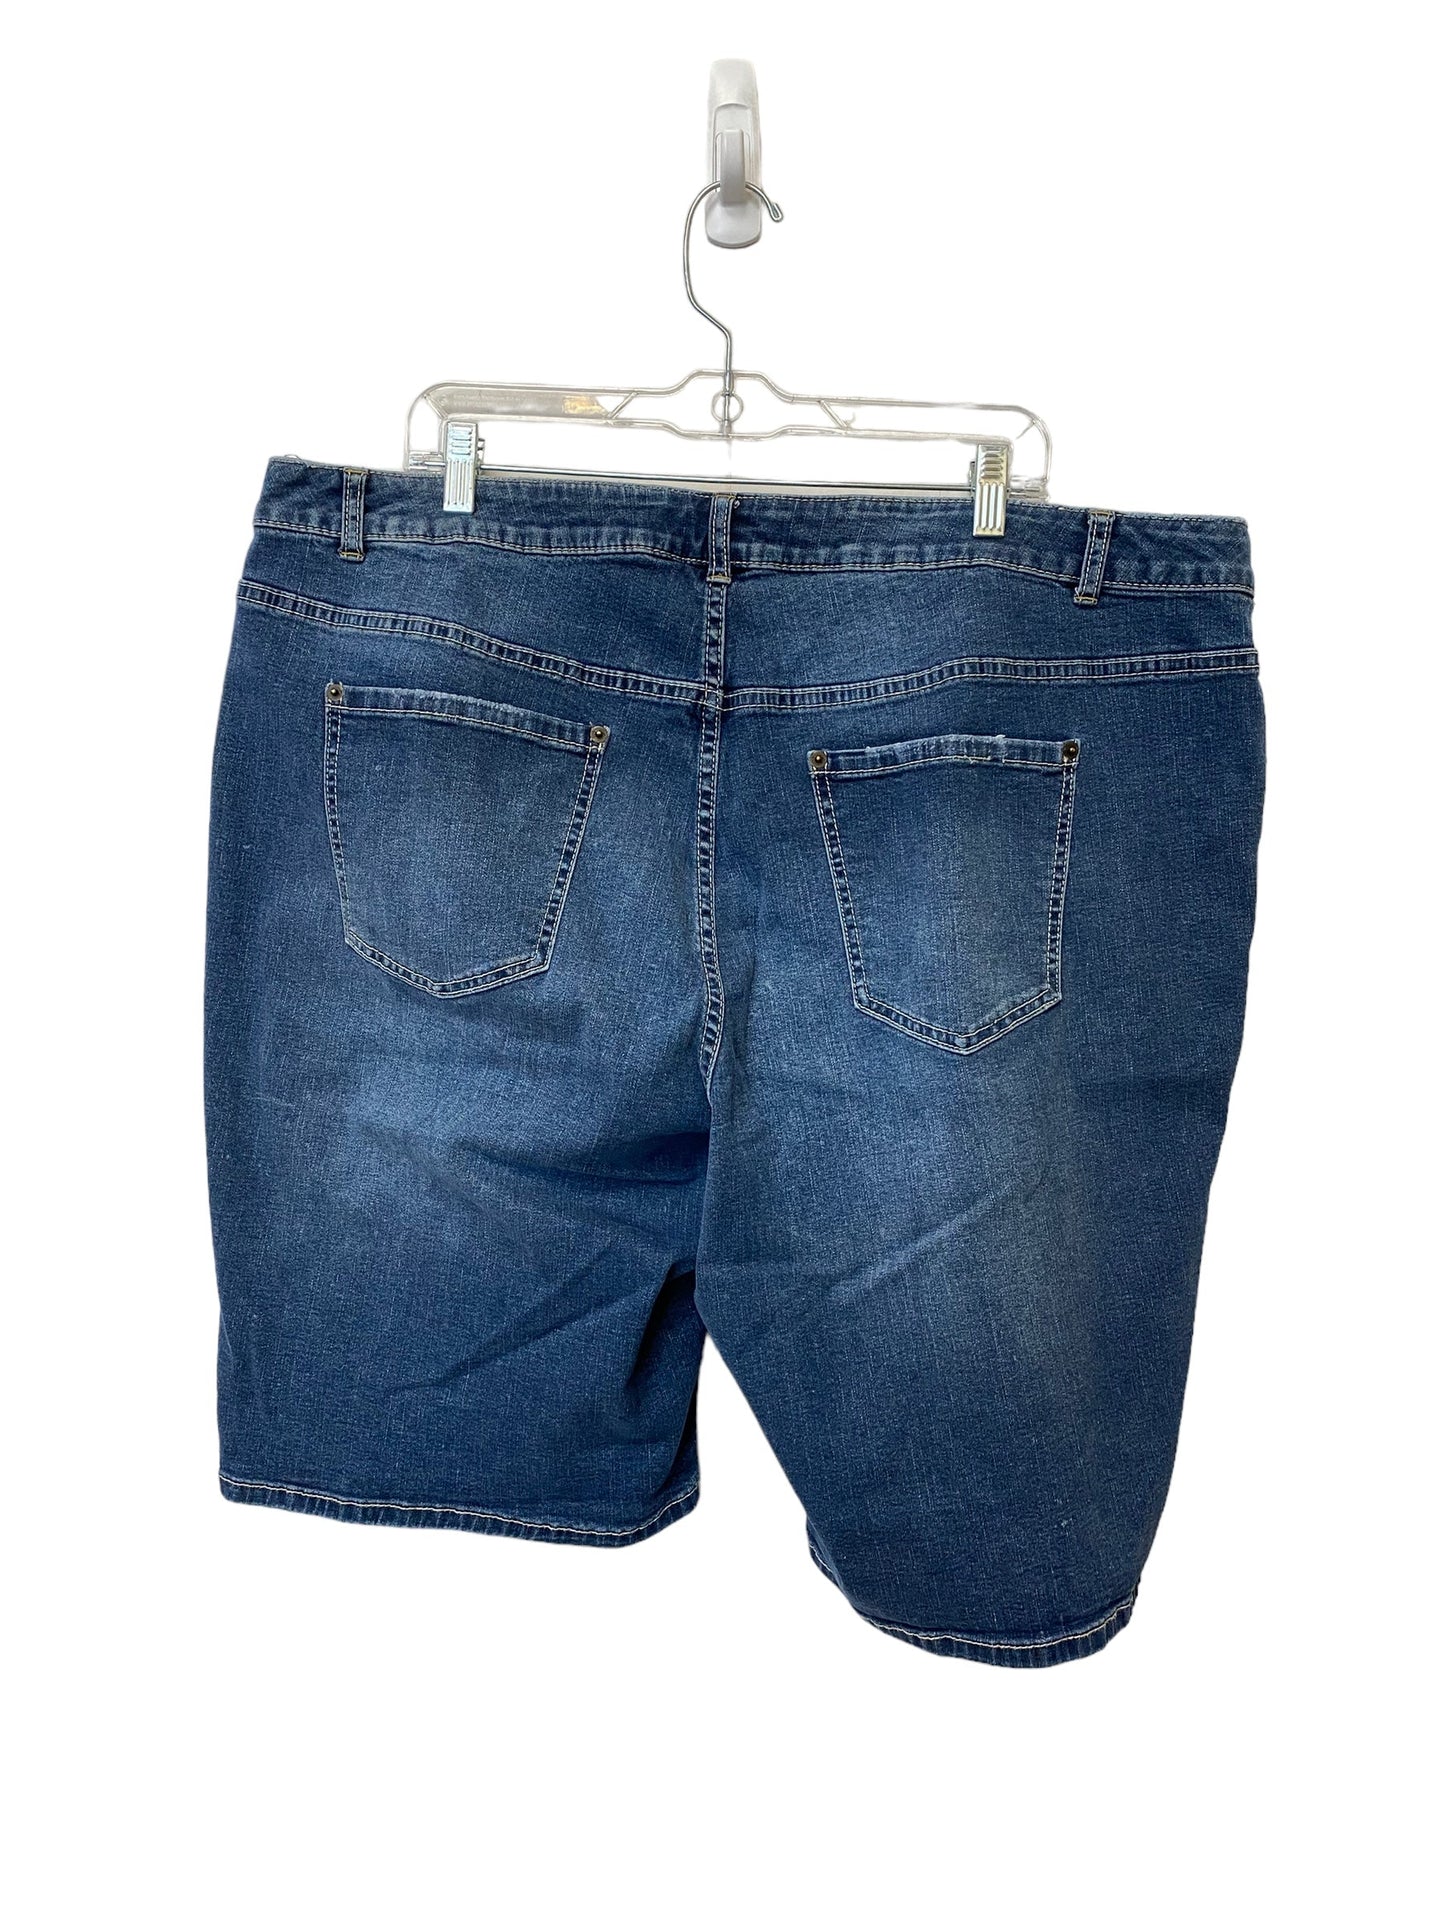 Shorts By Lane Bryant  Size: 24